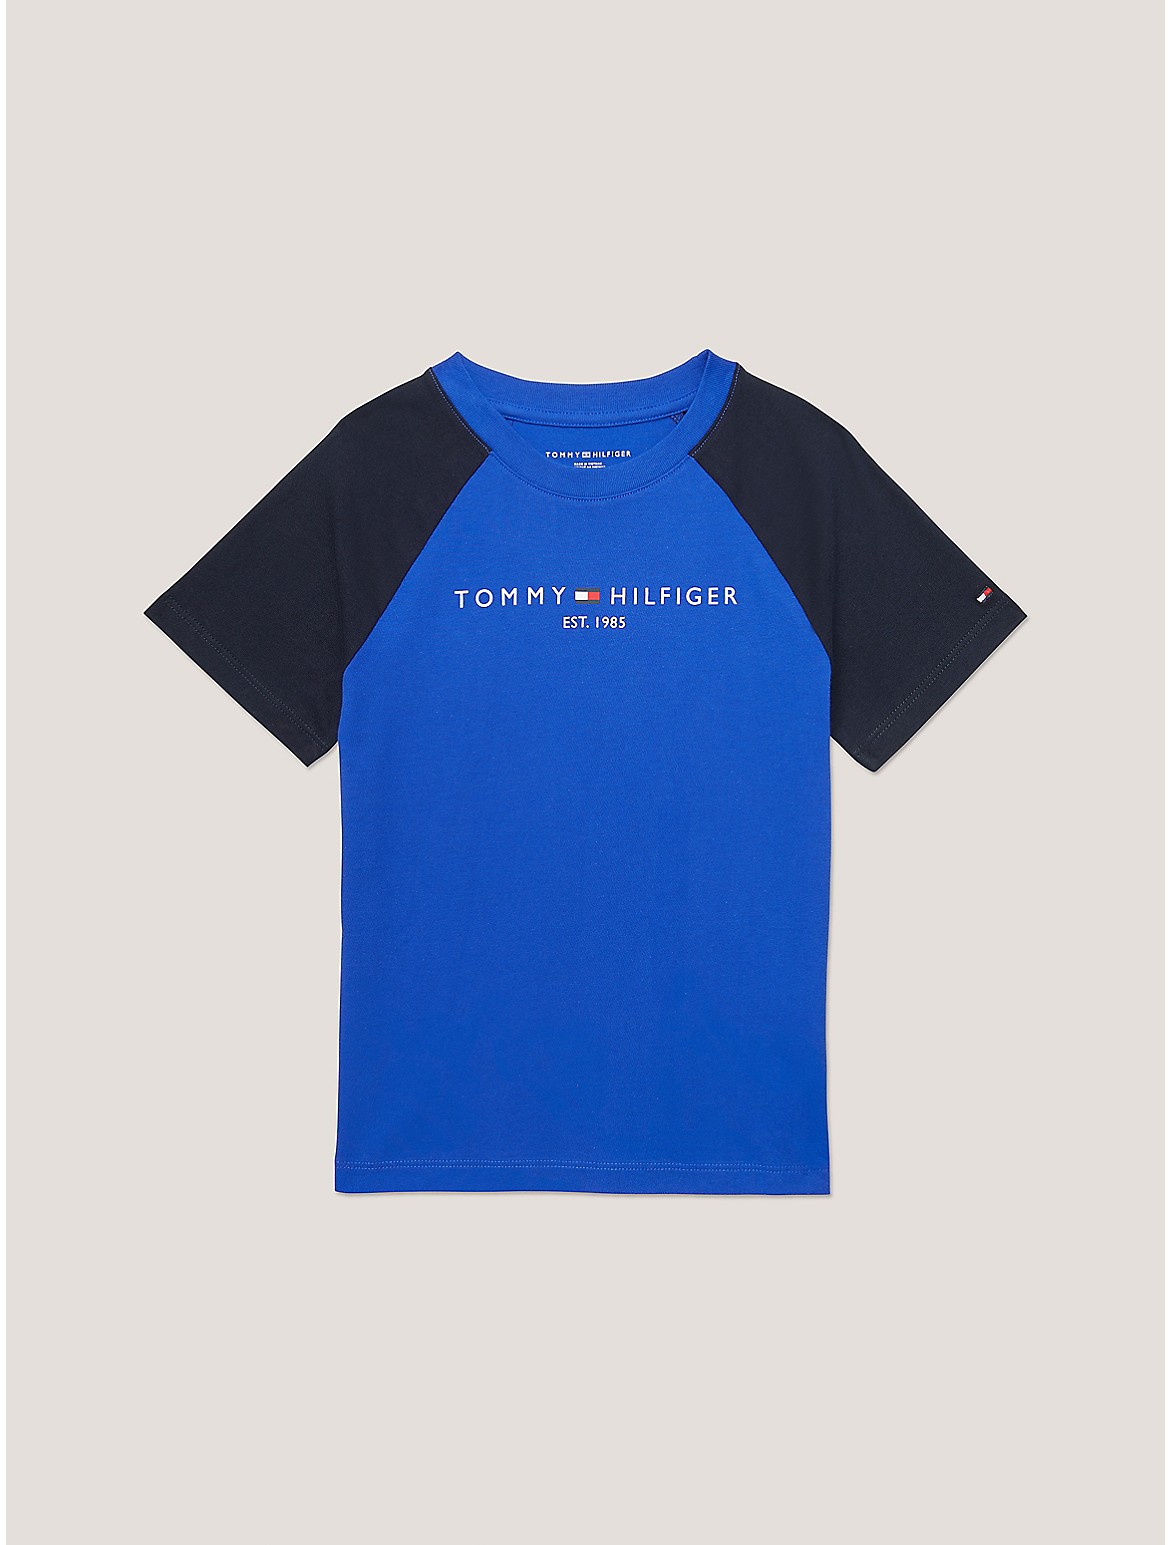 Tommy Hilfiger Boys' Kids' Baseball T-Shirt - Blue - M